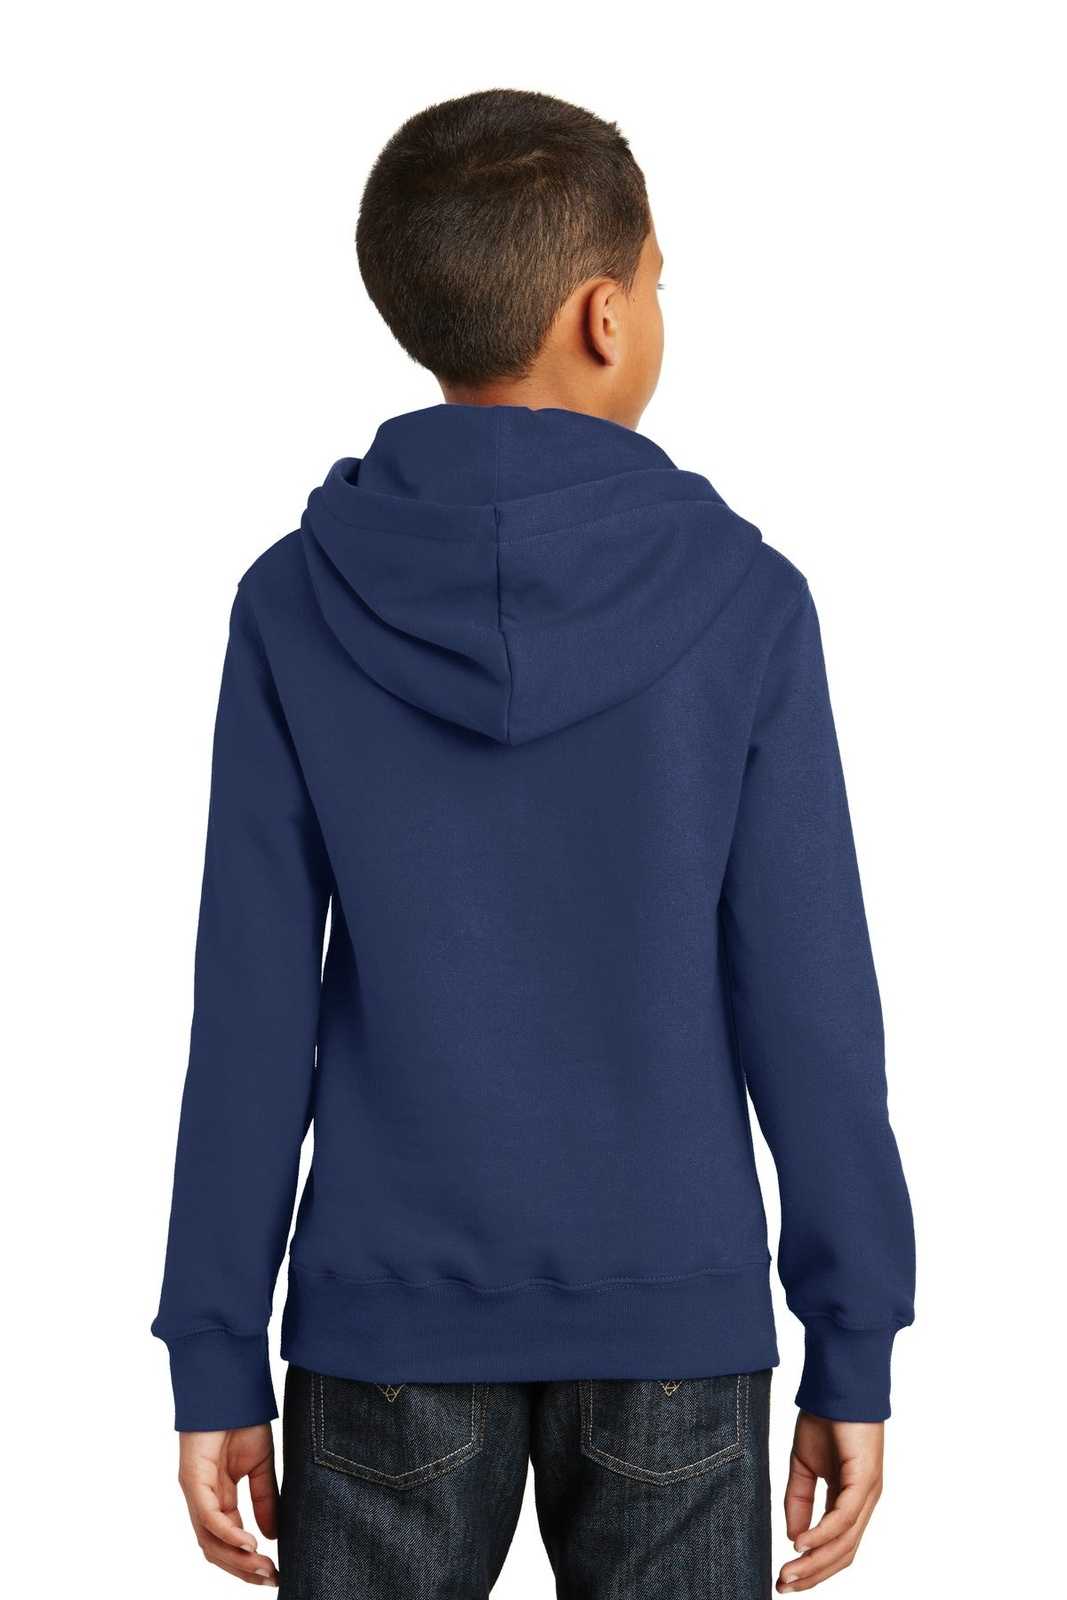 Port &amp; Company PC850YH Youth Fan Favorite Fleece Pullover Hooded Sweatshirt - Team Navy - HIT a Double - 2